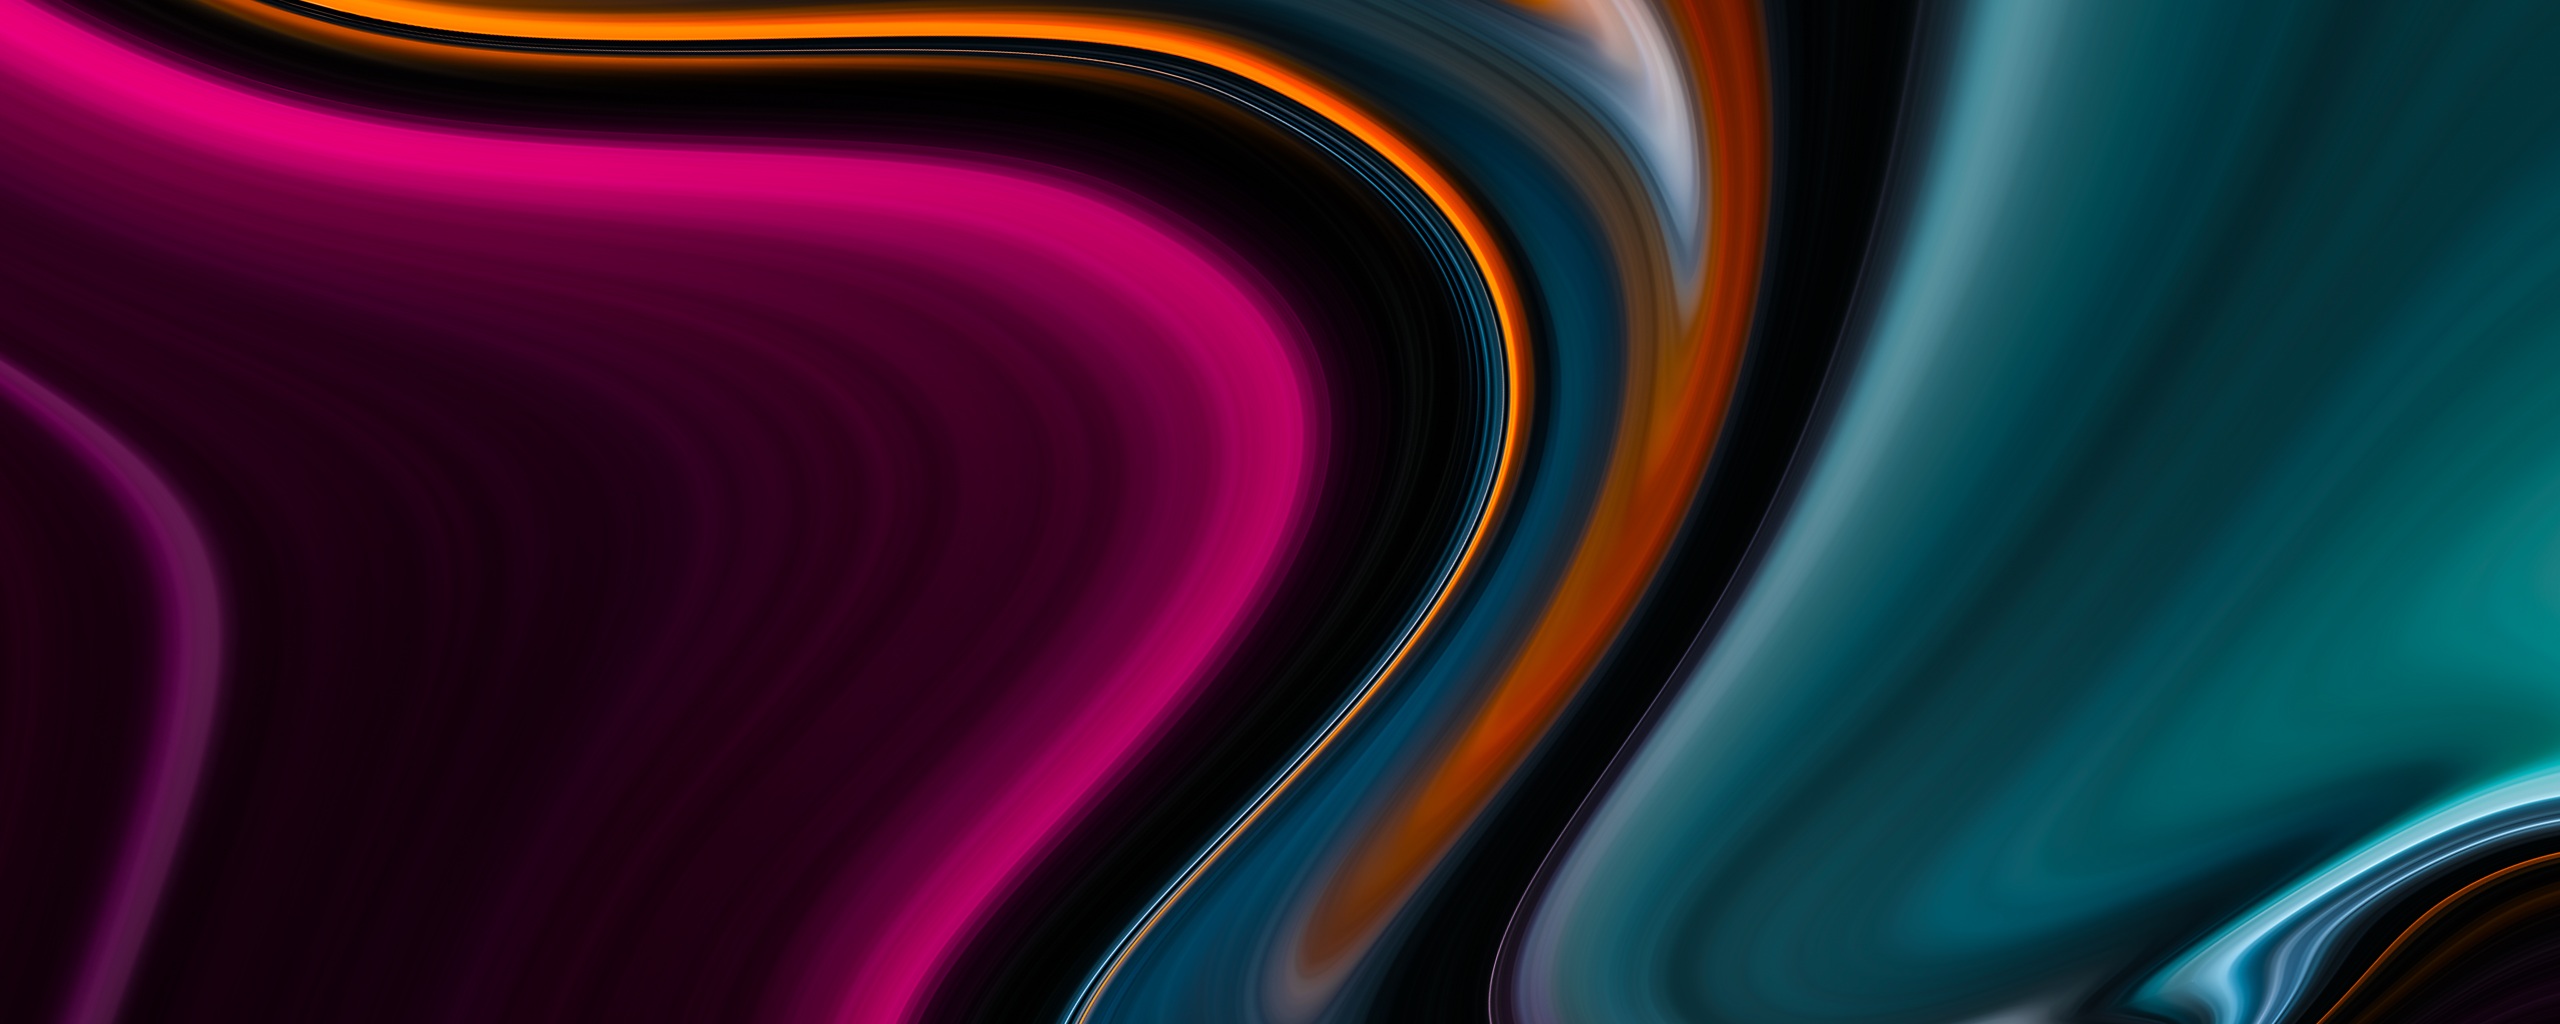 Abstract Color Flow 4k Wallpaper 4K